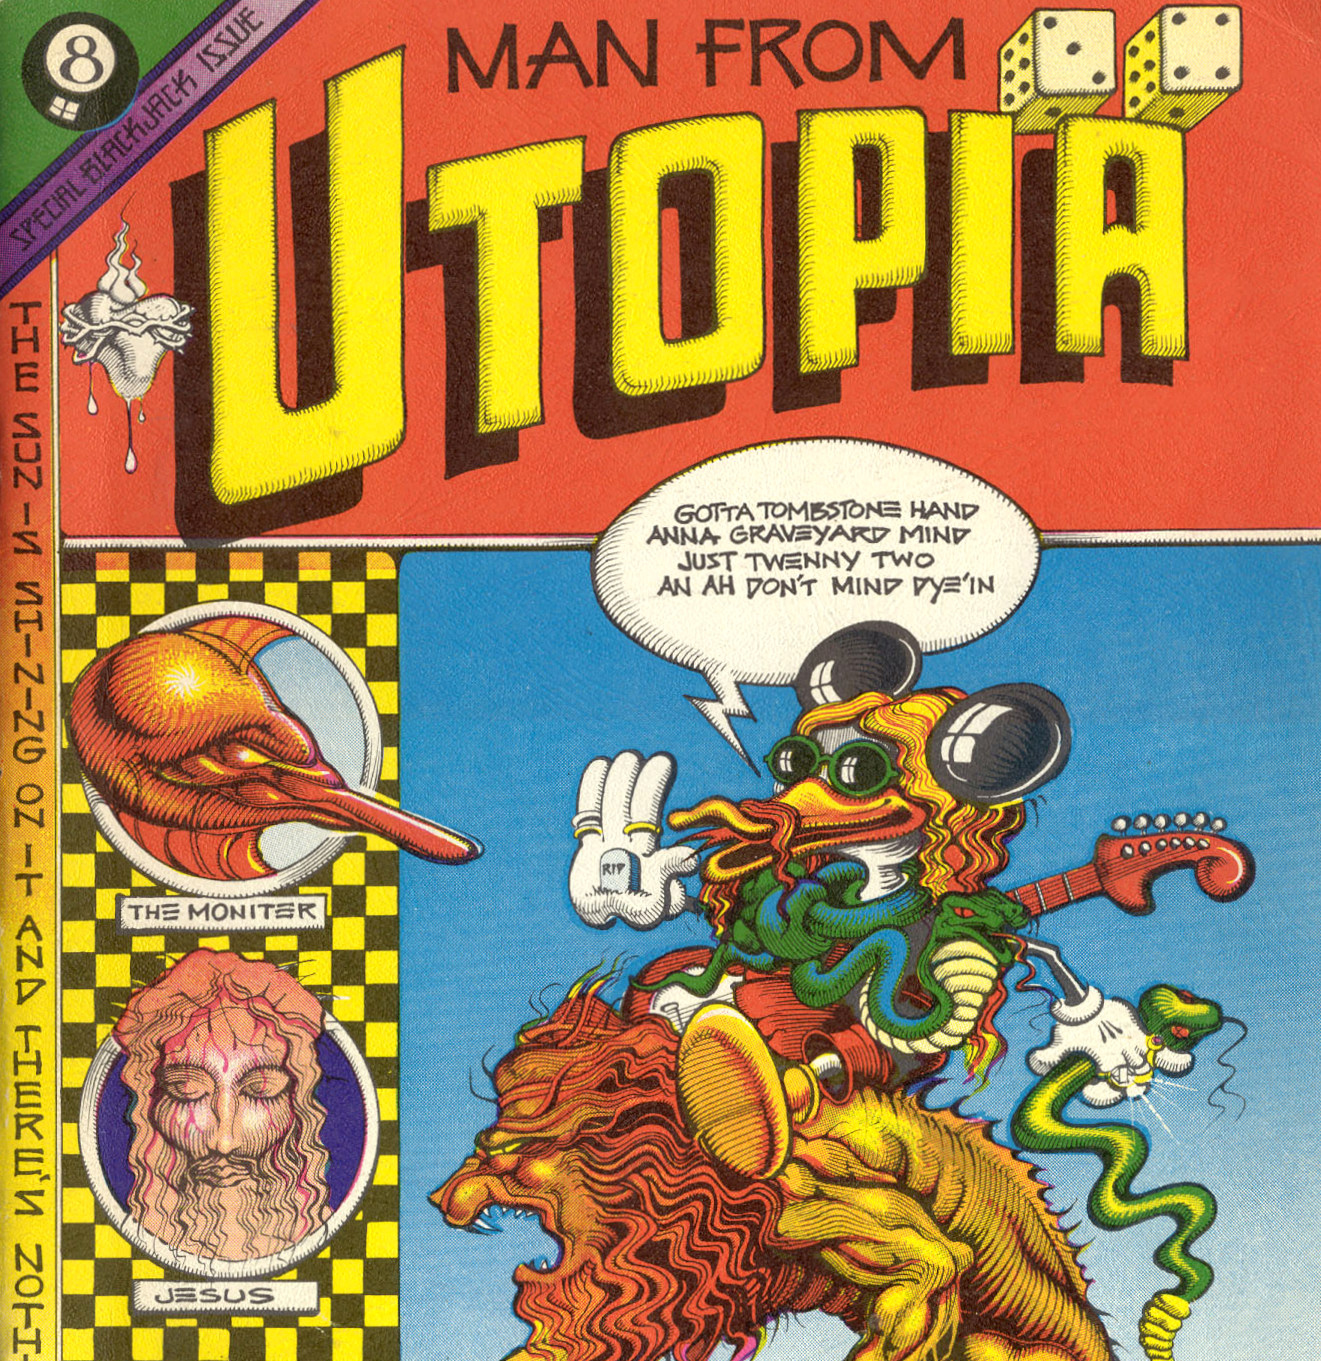 Man from Utopia